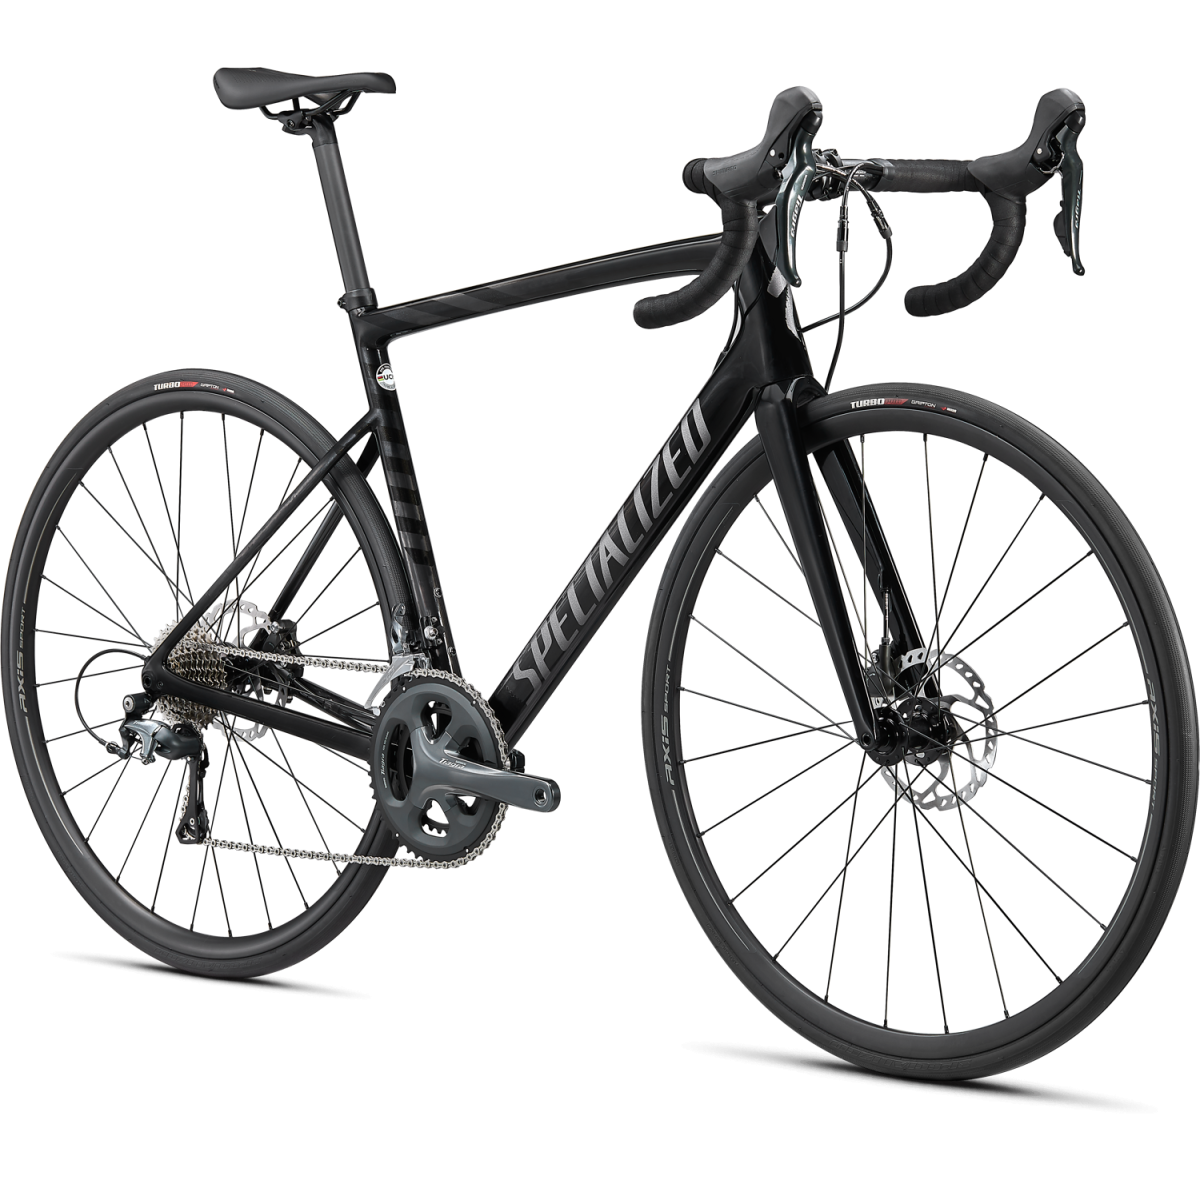 Specialized Tarmac SL6 plento dviratis / Tarmac Black